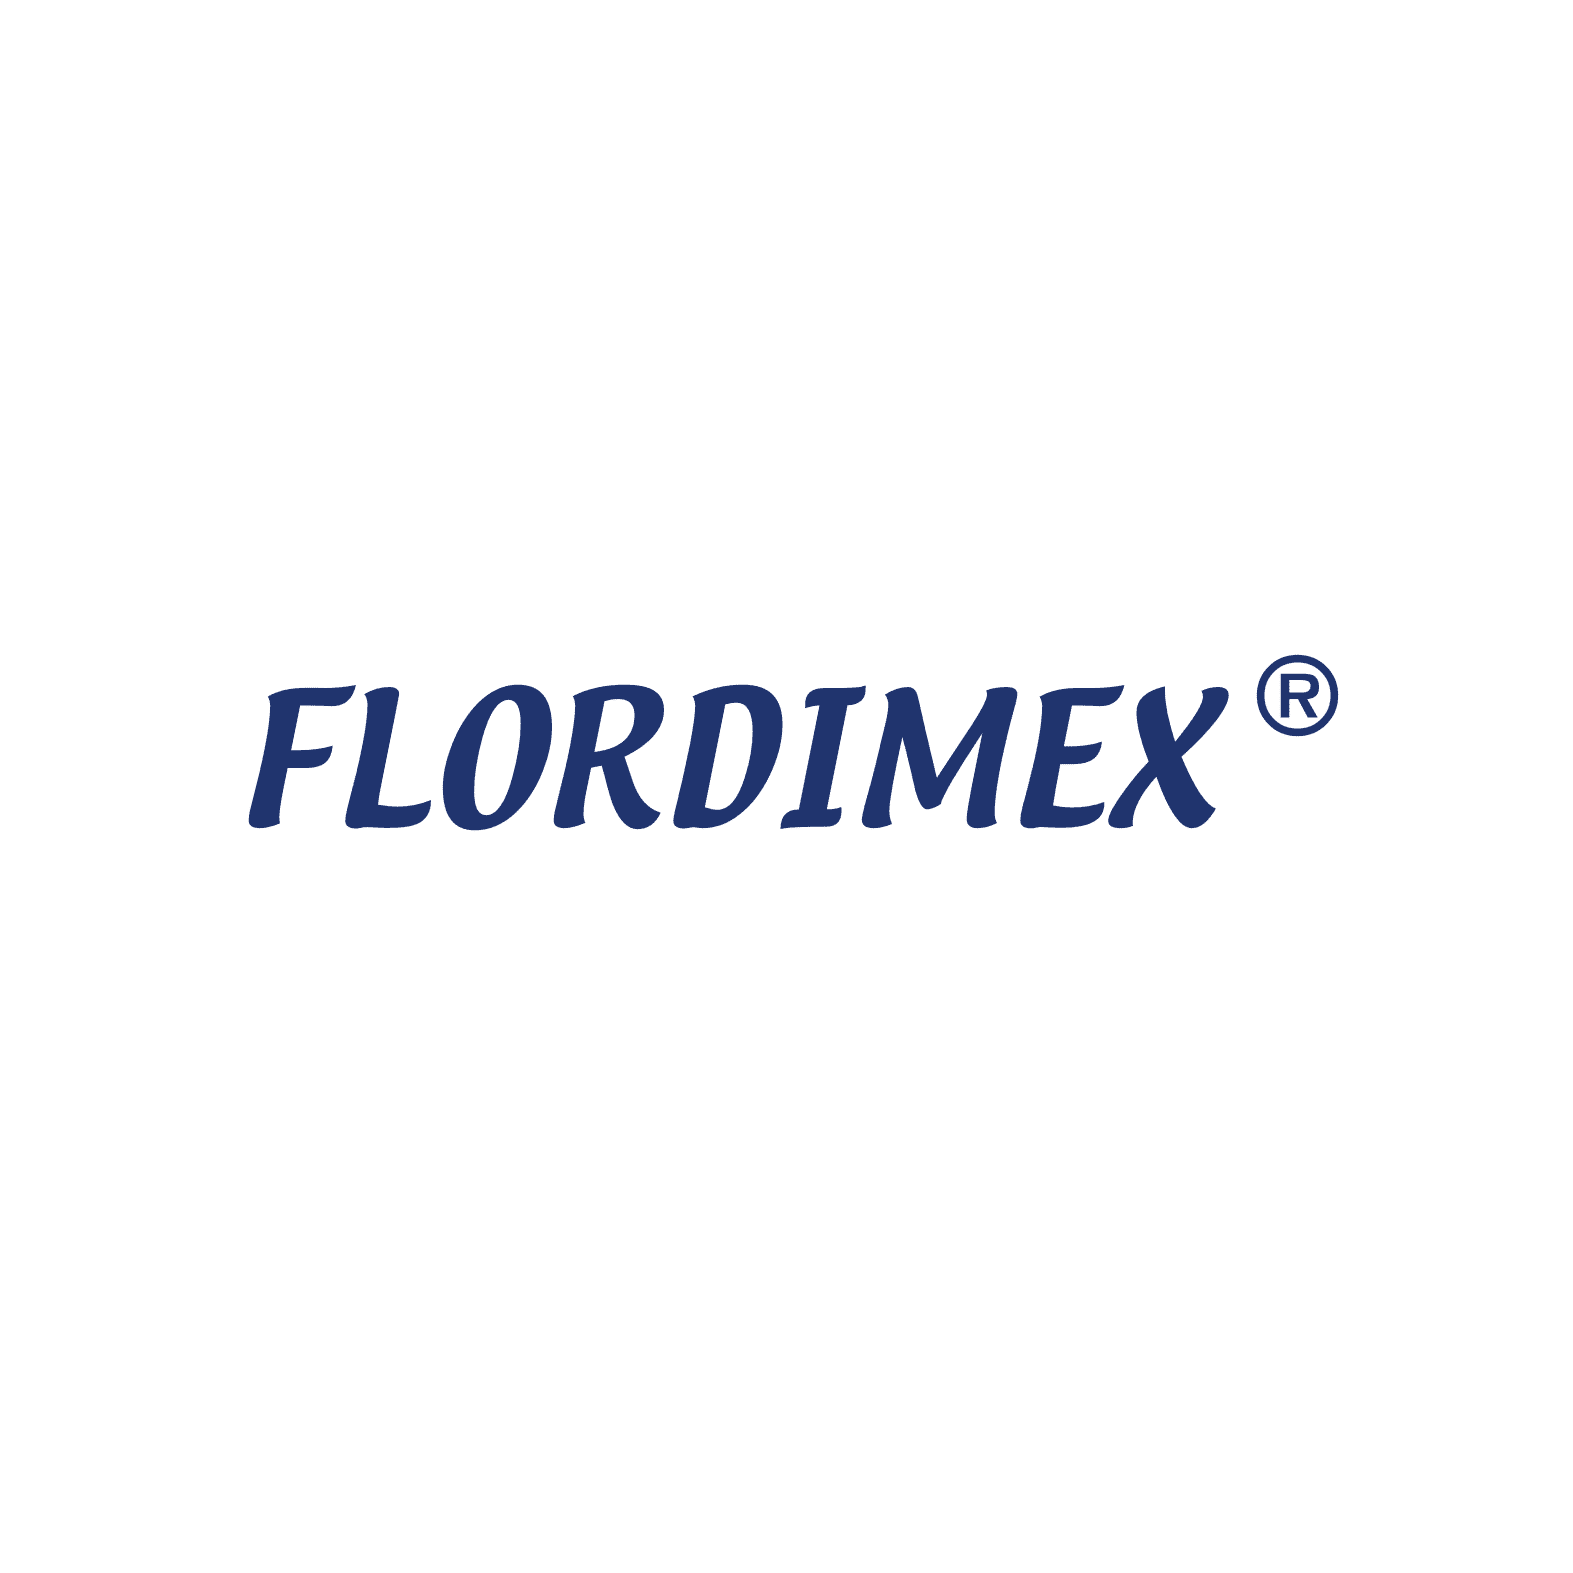 FLORDIMEX® resmi